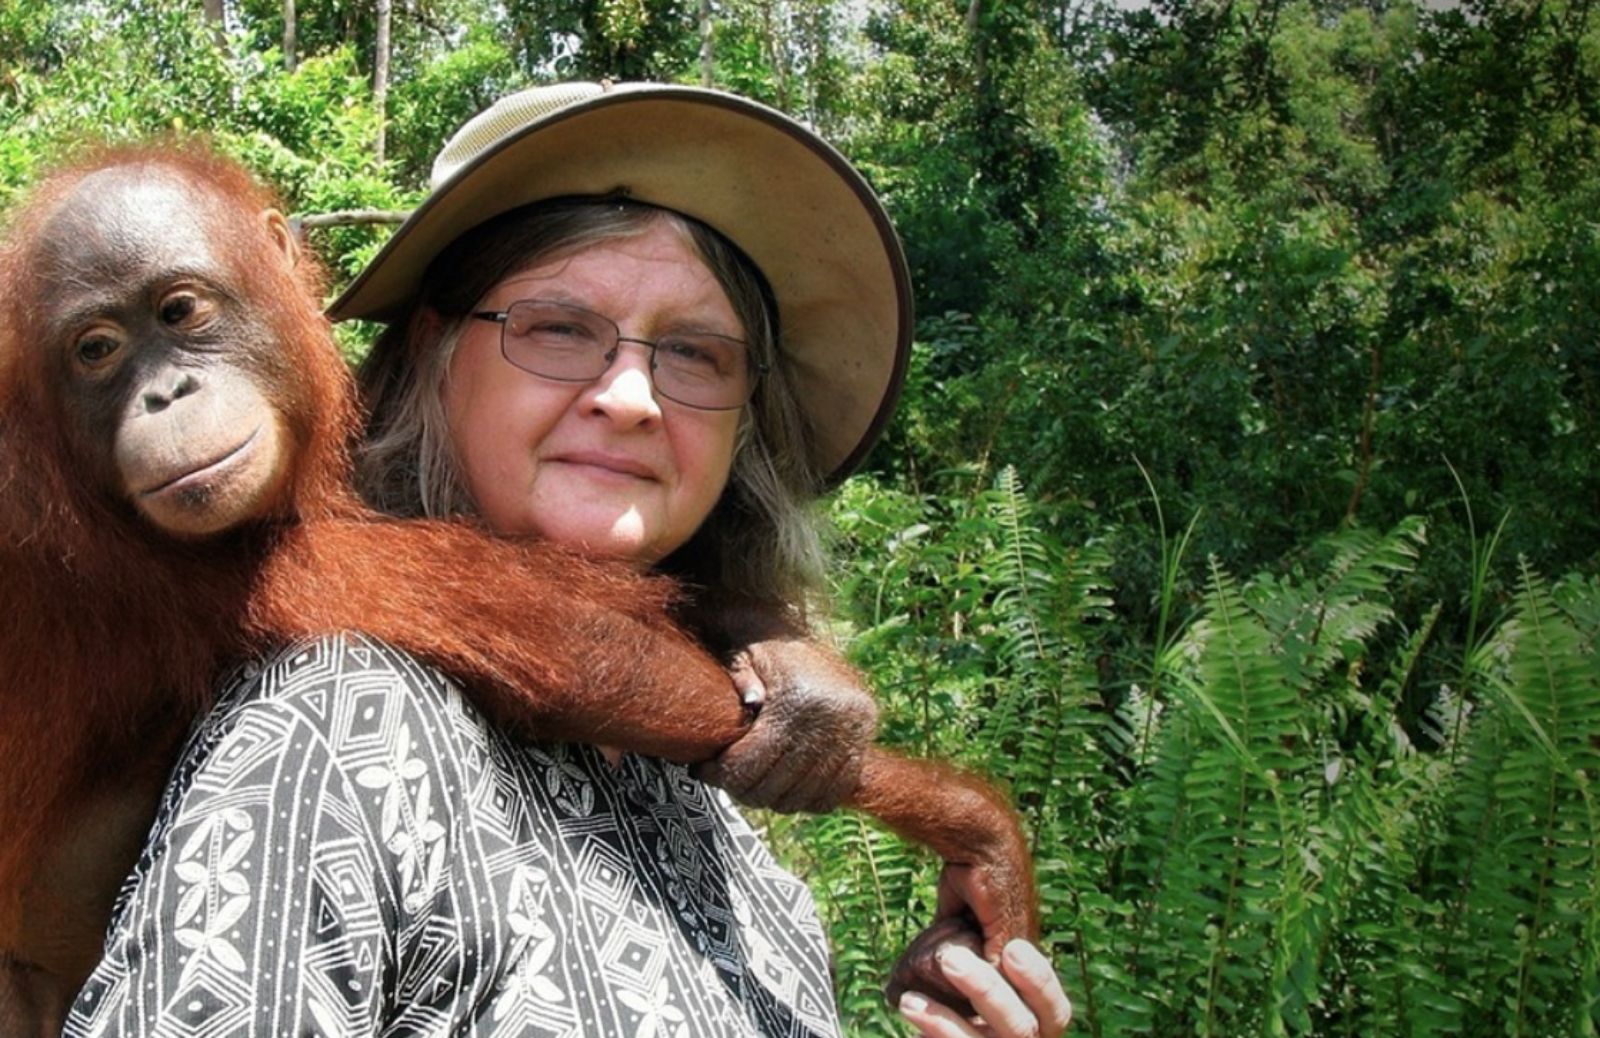 Birutė Galdikas, una vita per salvare gli oranghi